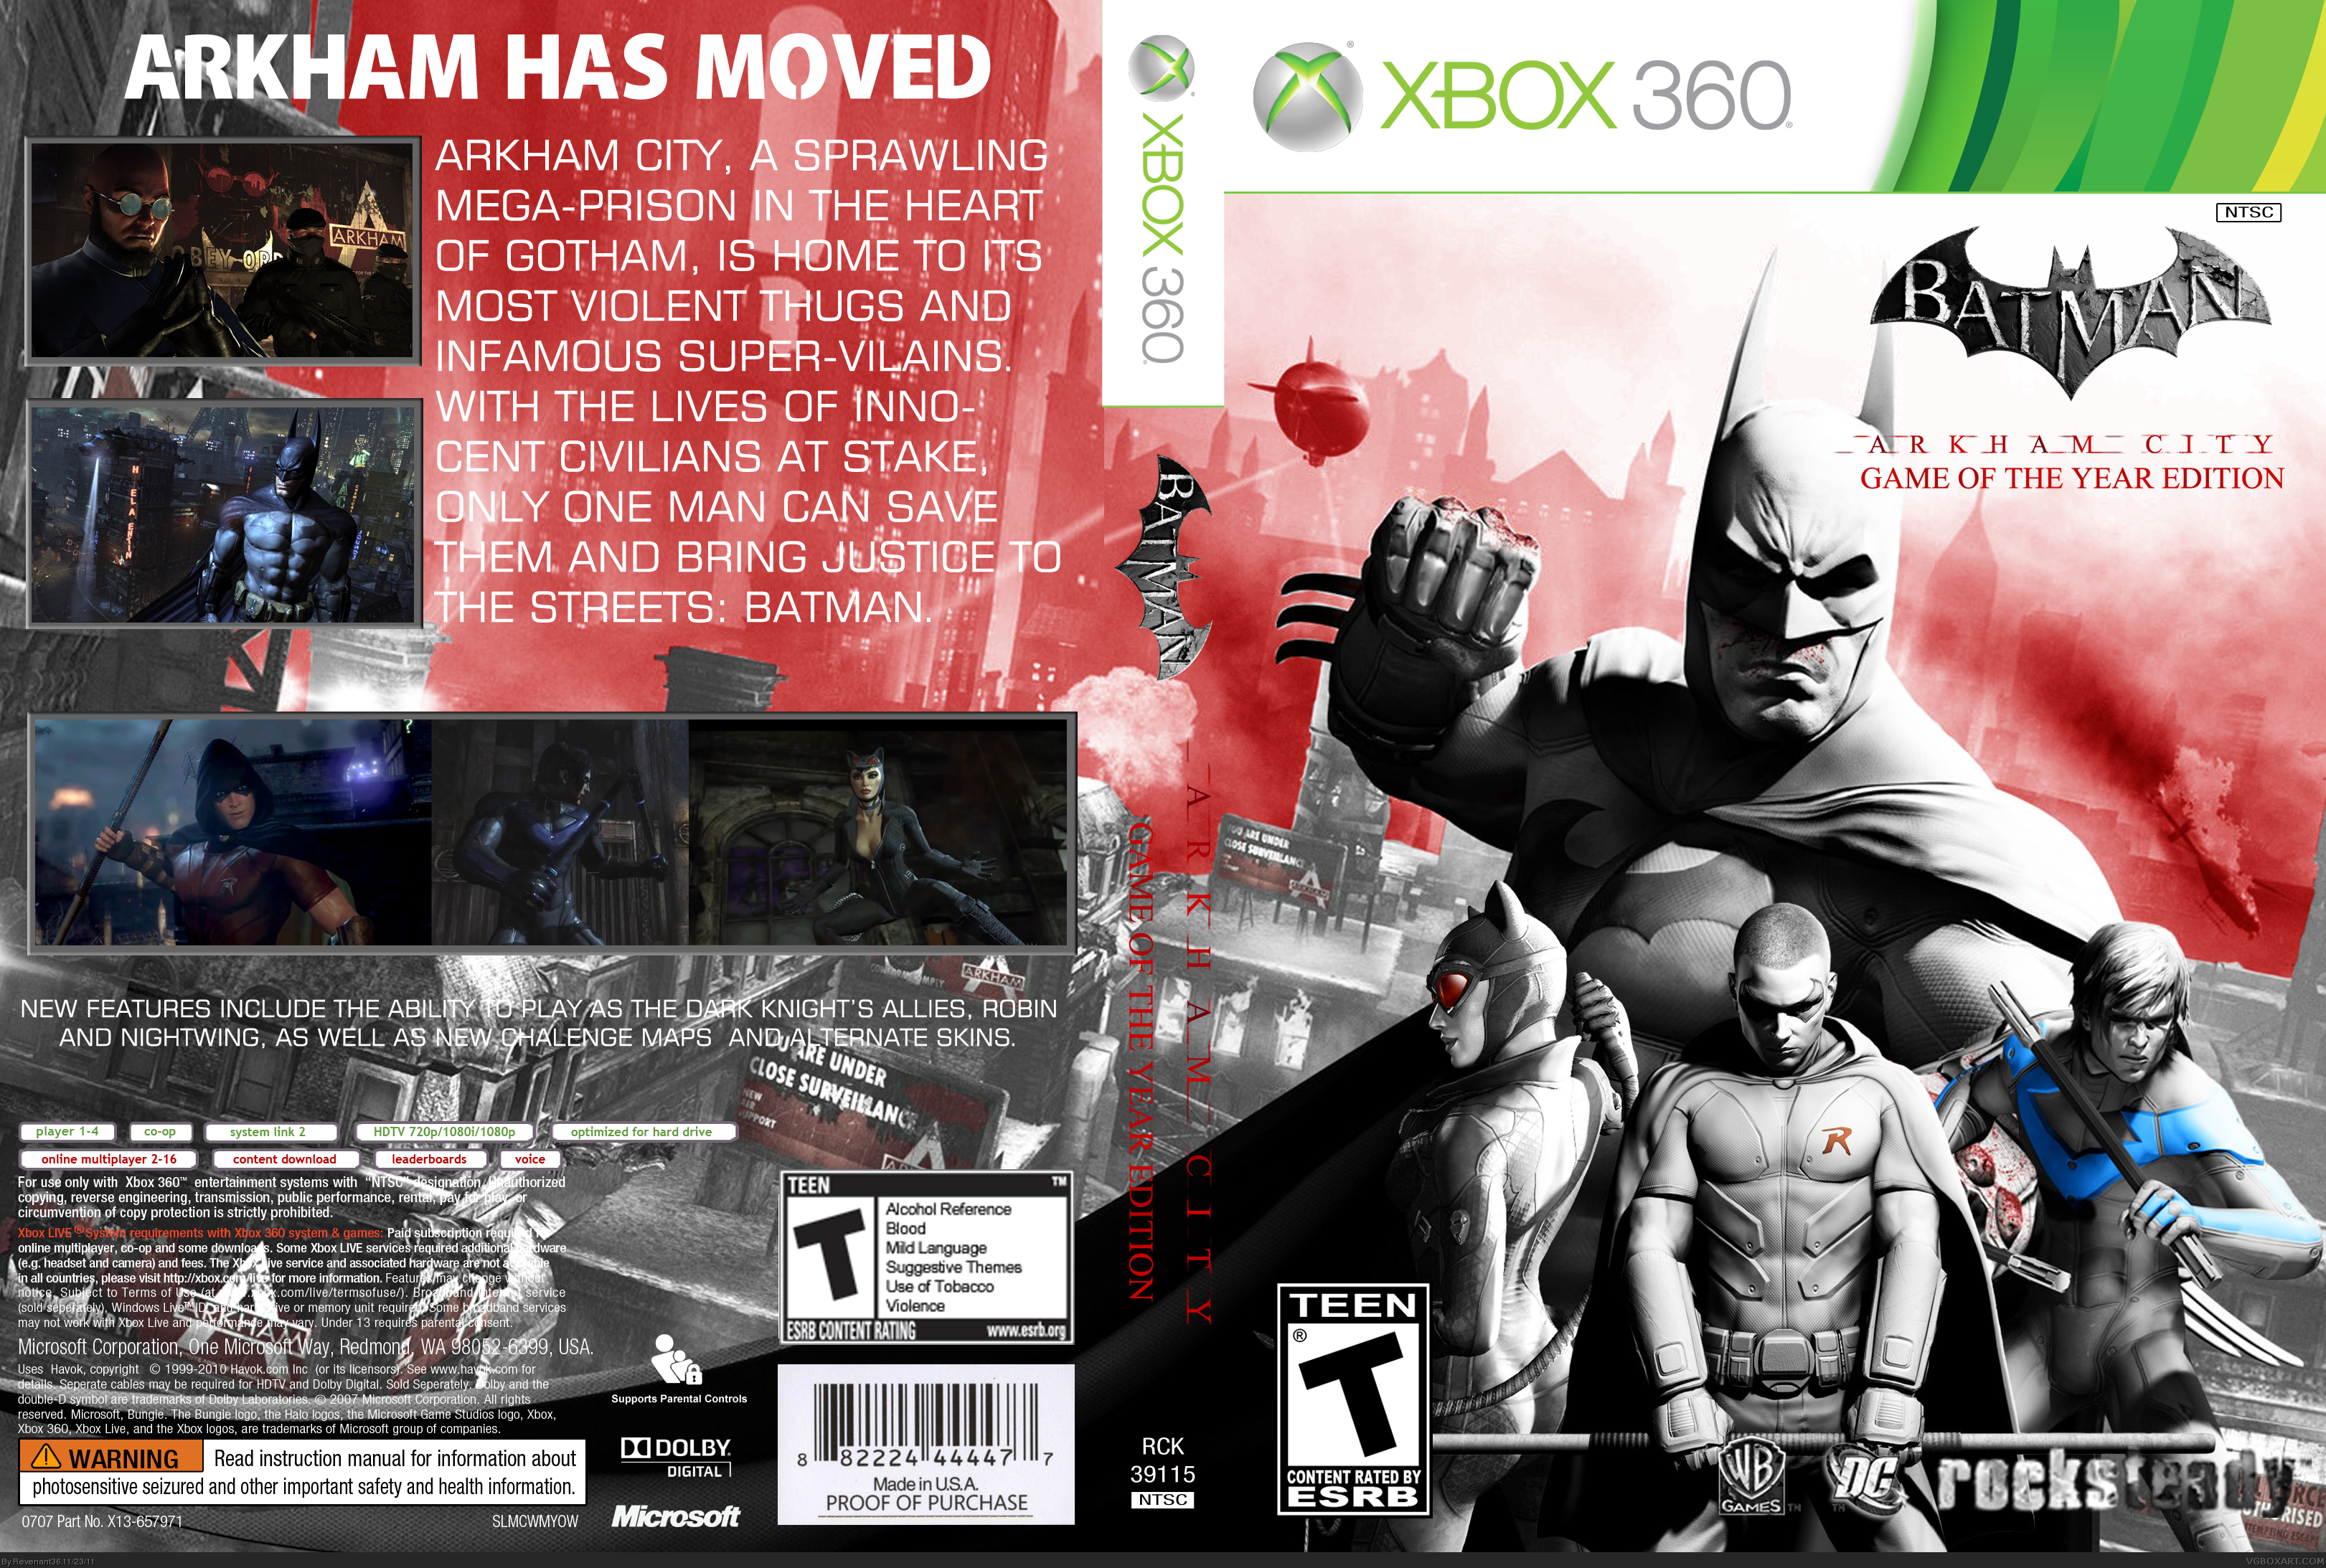 Batman: Arkham City (GOTY Edition) box cover. 